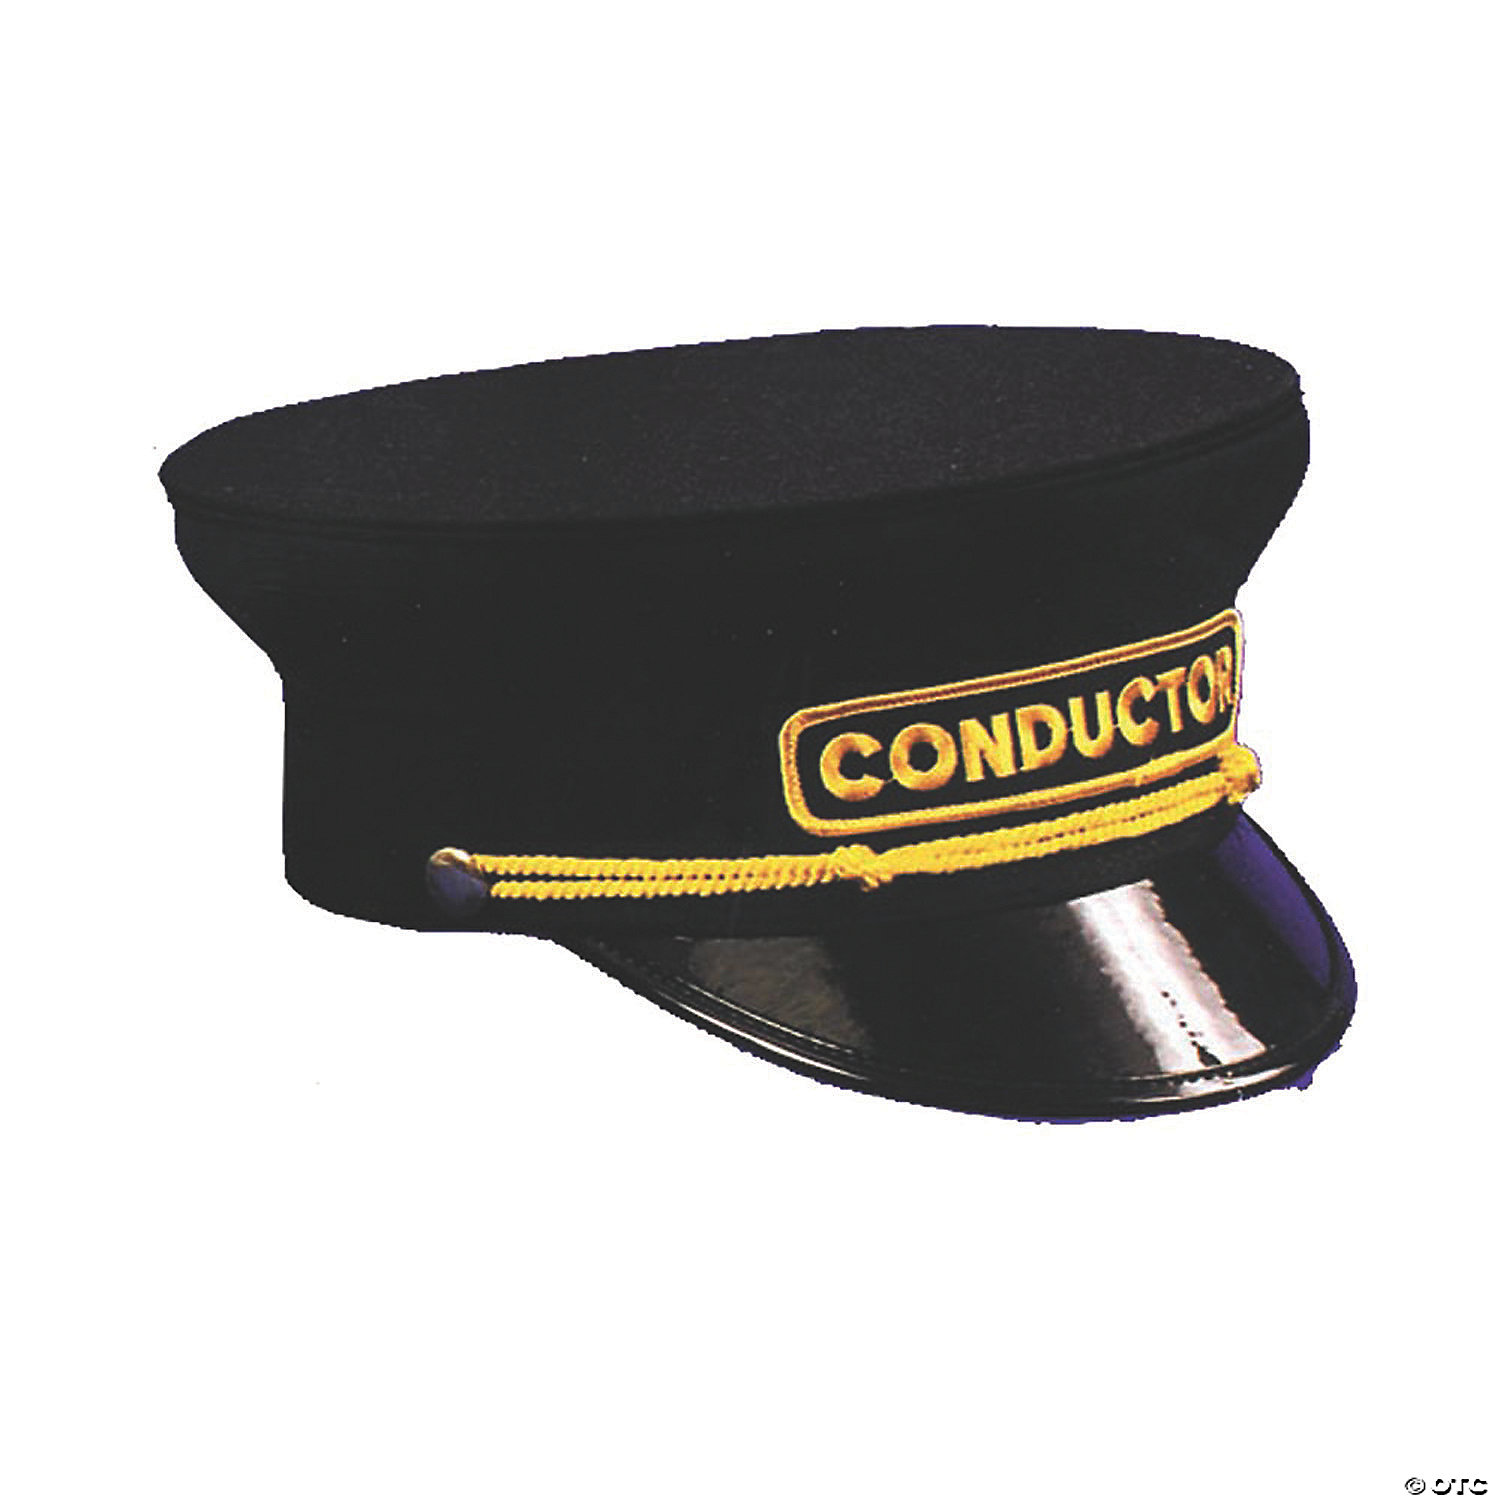 CONDUCTOR HAT 7 3/8 7 1/2 - HALLOWEEN